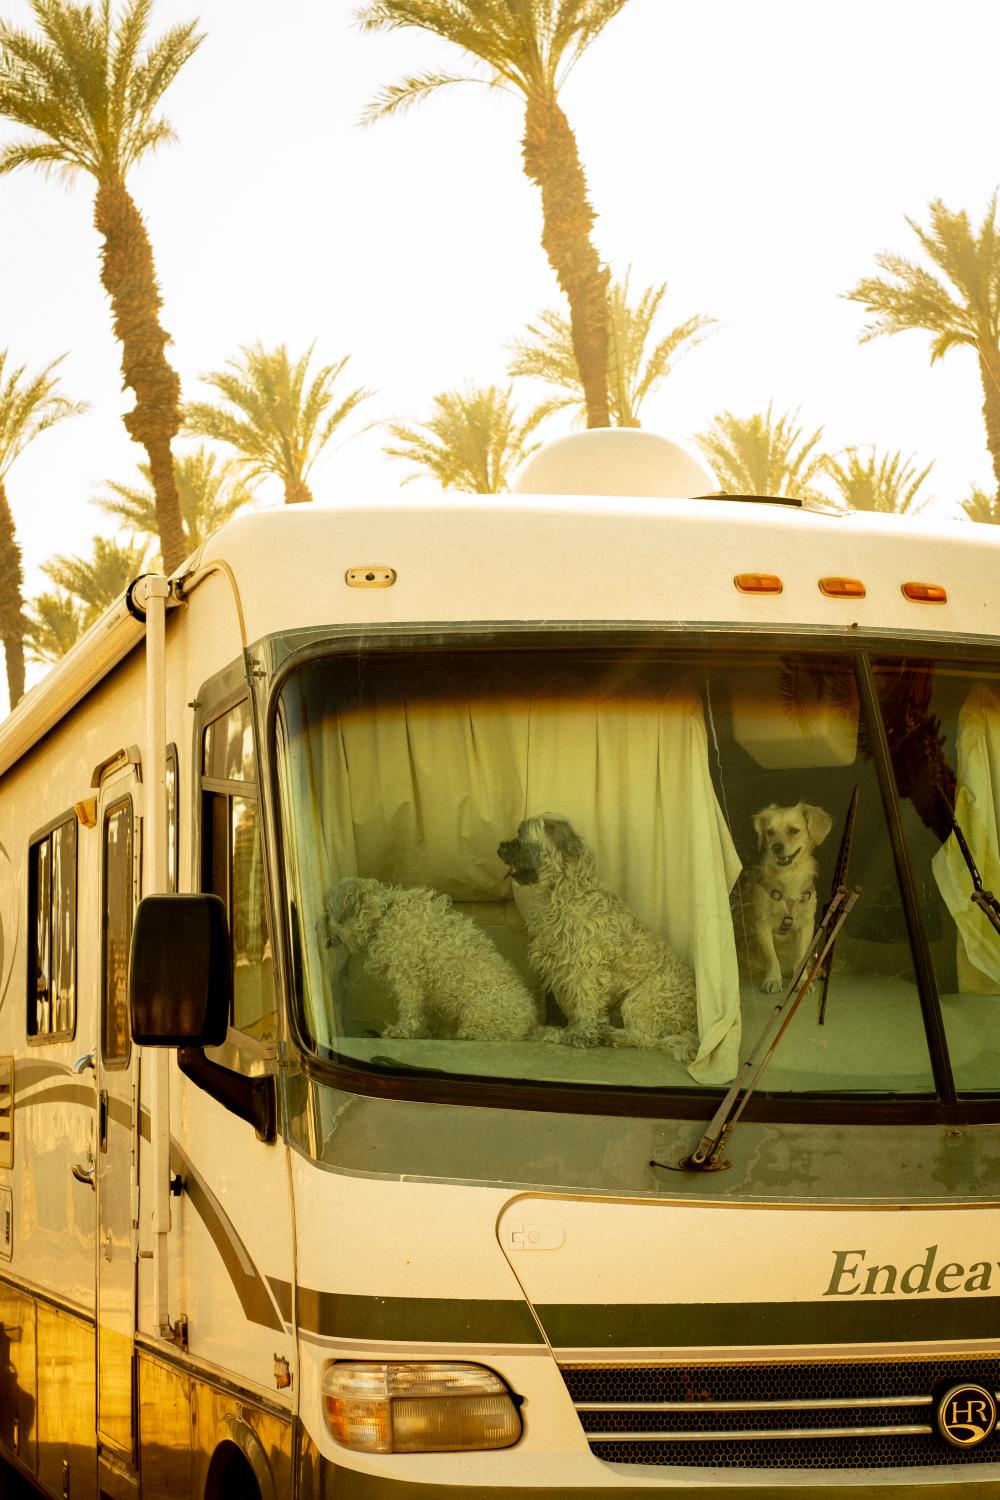 A Warm Winter (An Ongoing Journey) - RV resort in Palm Desert, California